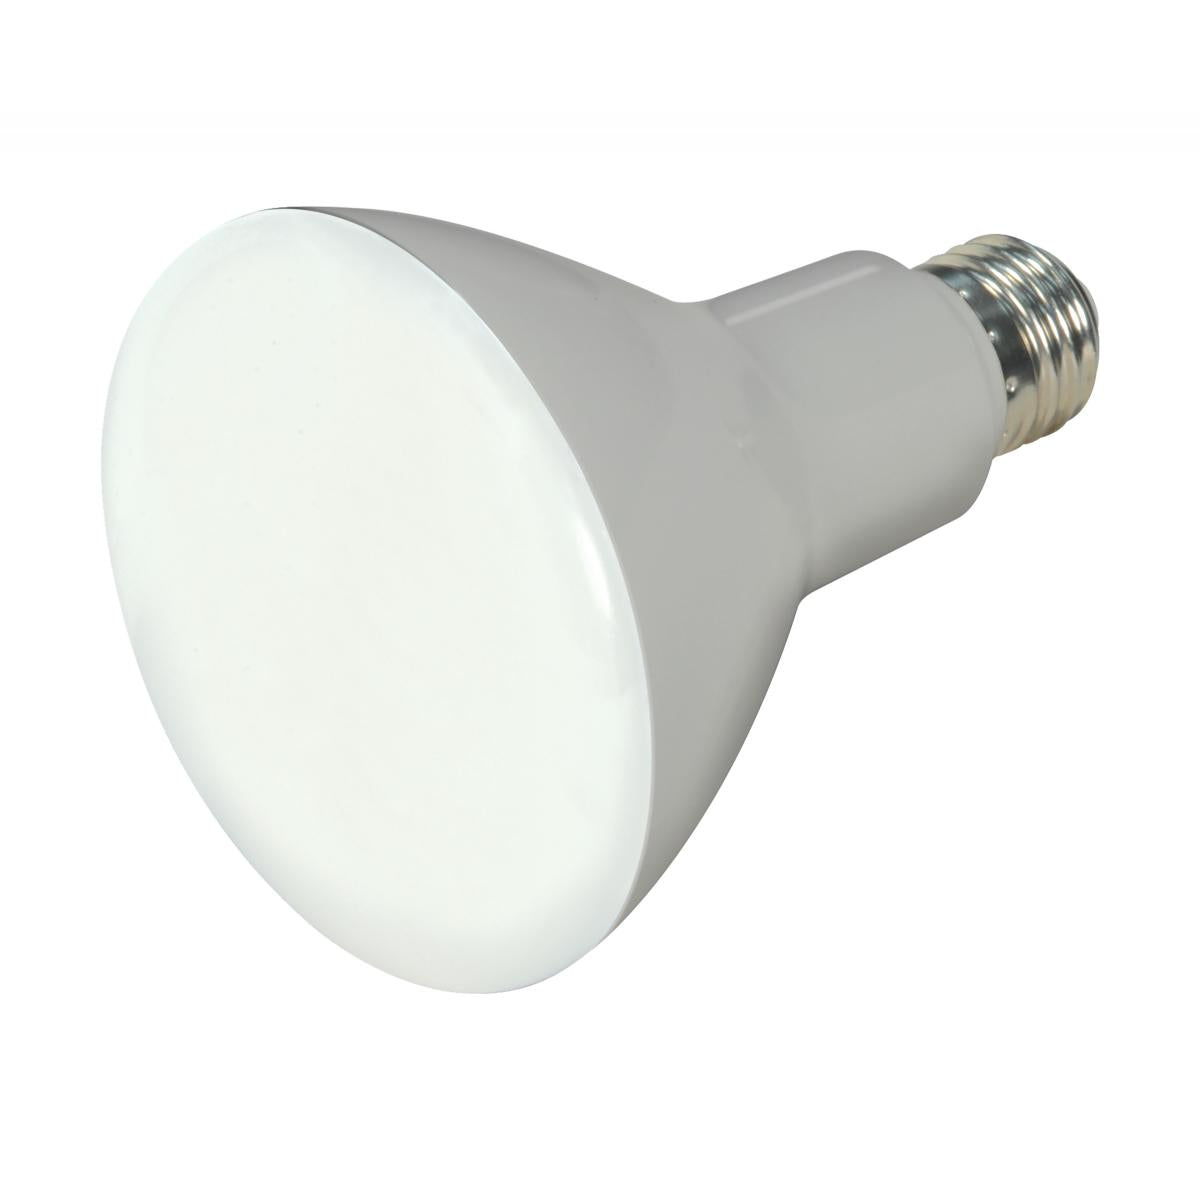 LED R30/BR30 Reflector bulb, 10 watt, 650 Lumens, 4000K, E26 Medium Base, 105 Deg. Flood, Dimmable